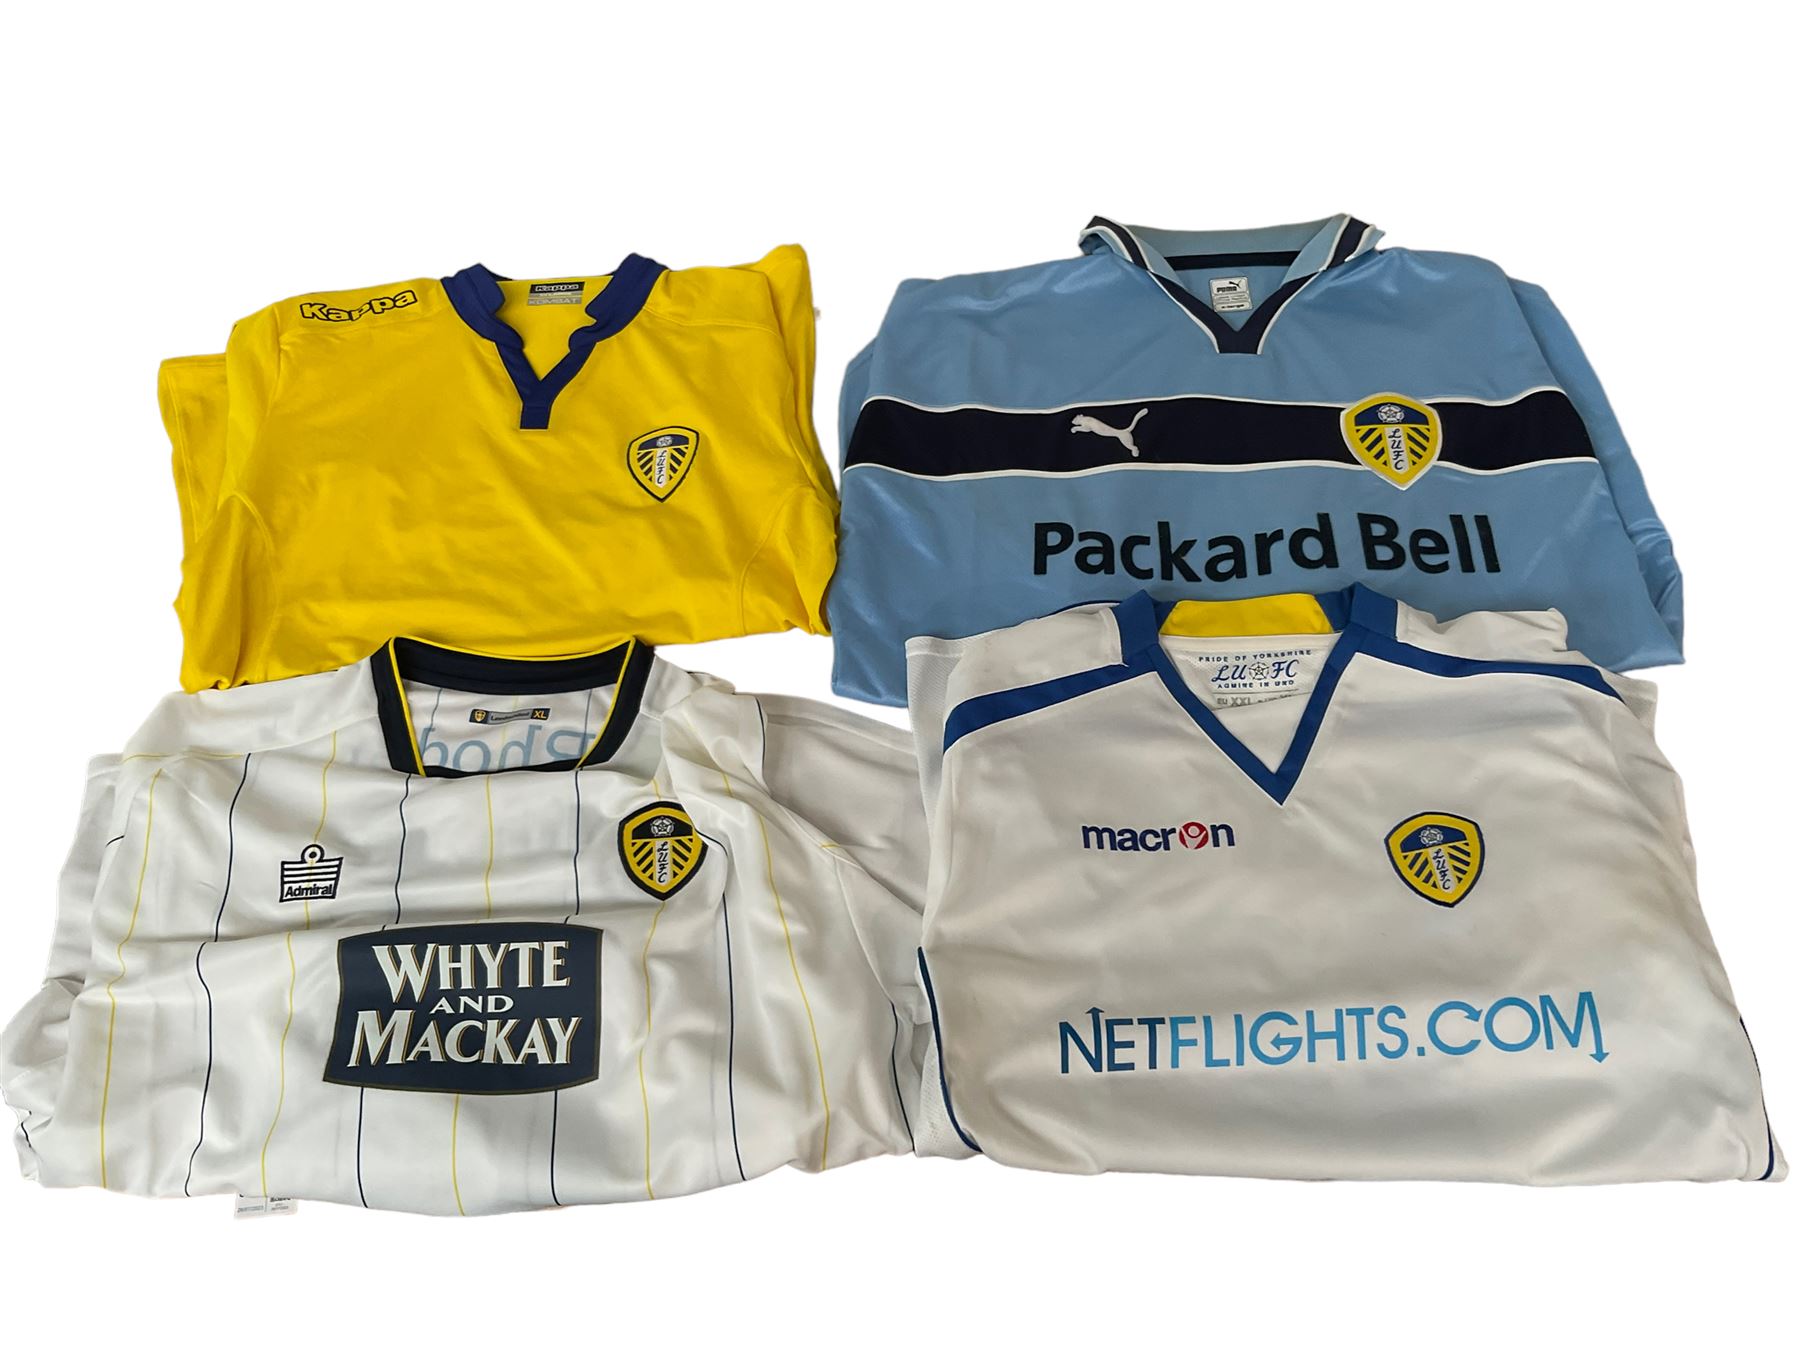 Leeds United football club - twenty-four replica shirts including home and away - Image 5 of 7